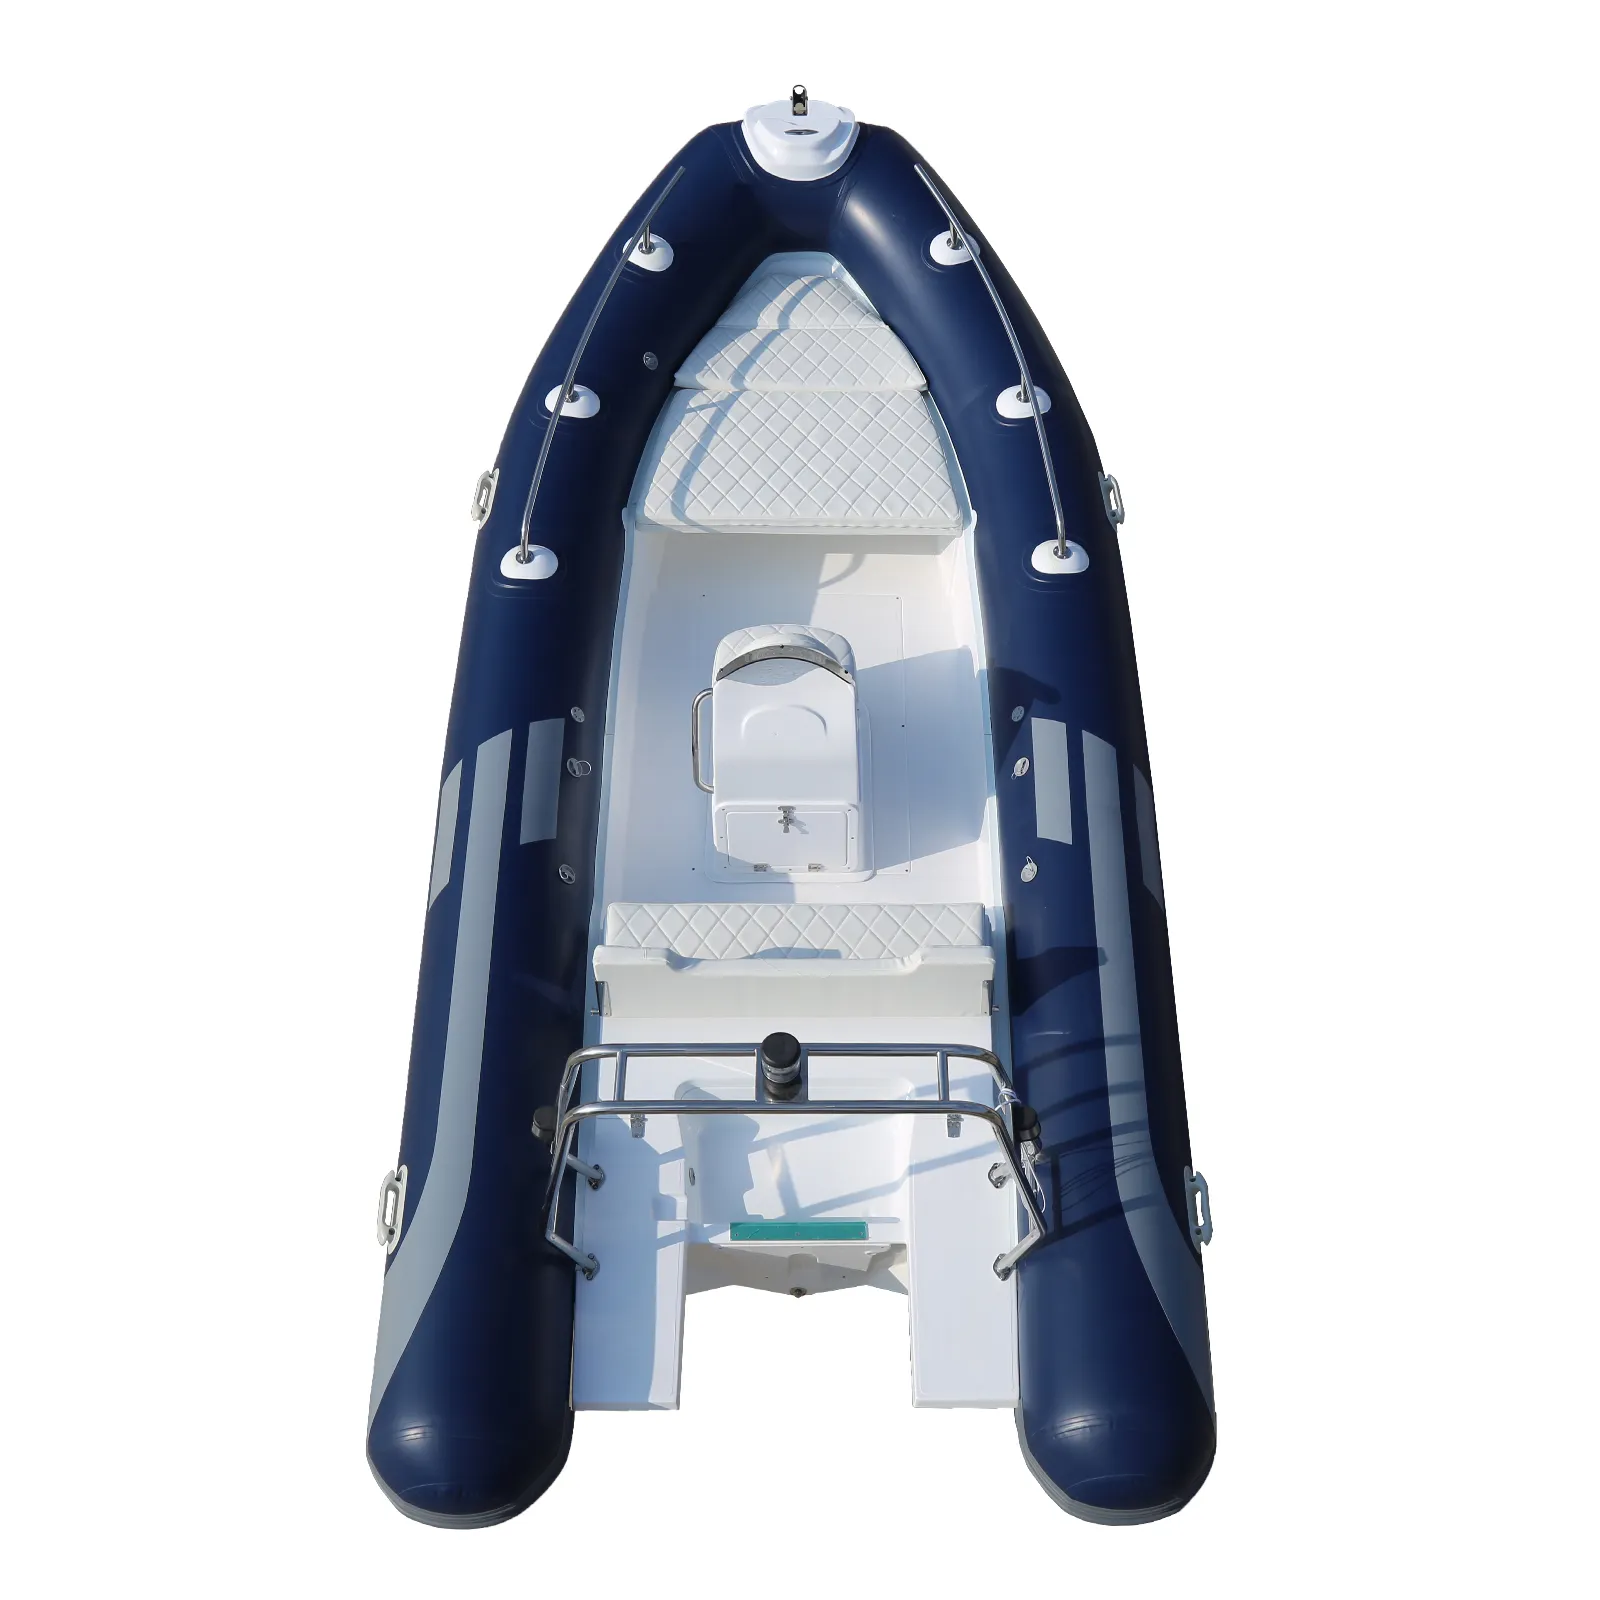 China Rowing Yacht Rib Angeln Fiberglas Motor Luxus Starre neue Ponton Jet Rib Boot mit maßge schneider ten Logo